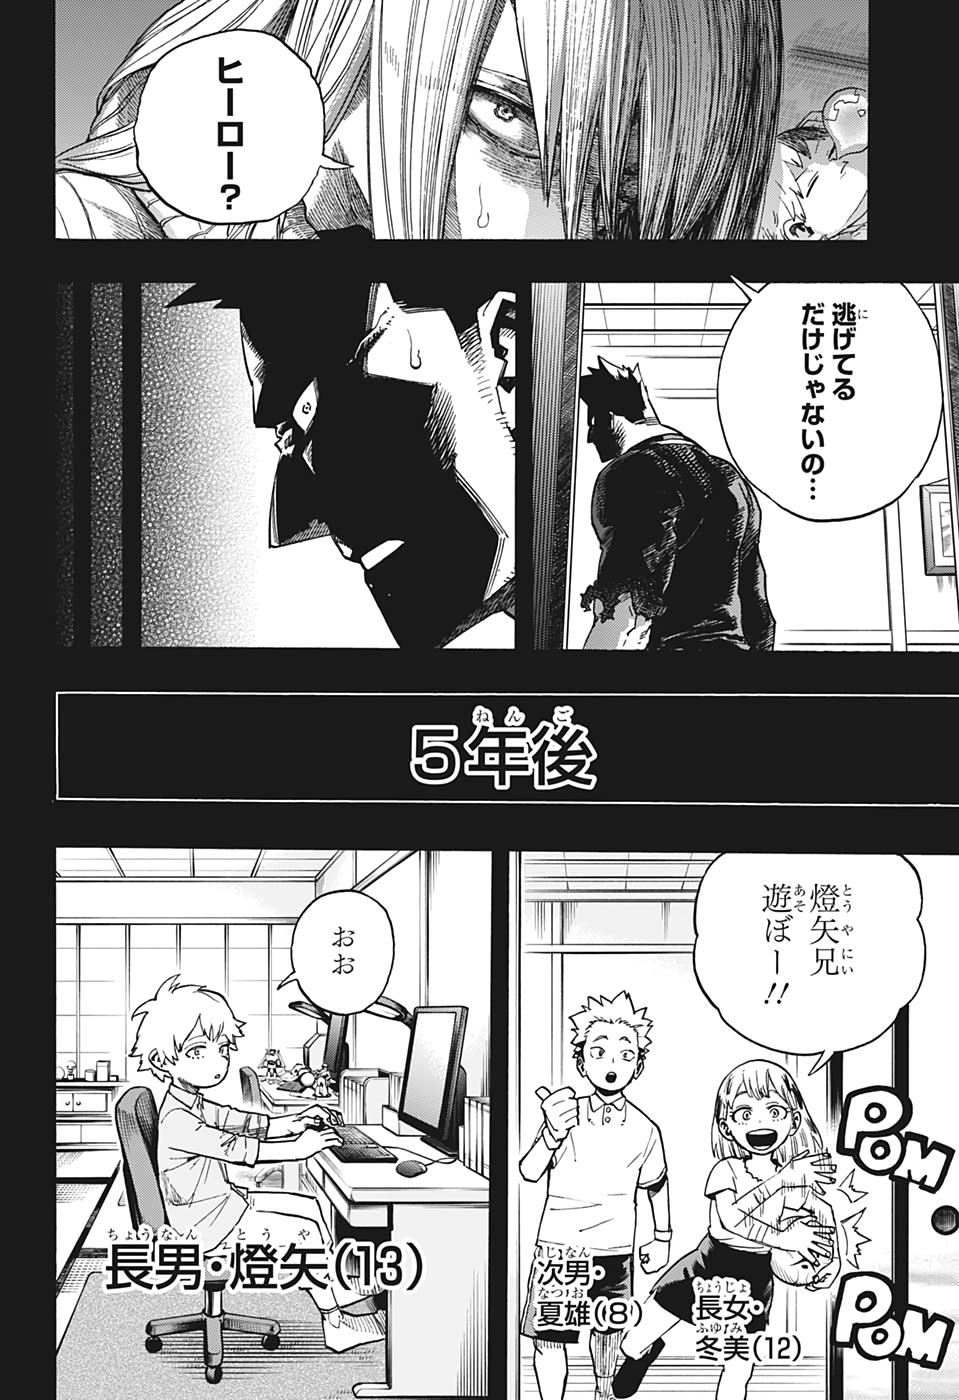 Boku no Hero Academia - Chapter 302 - Page 2